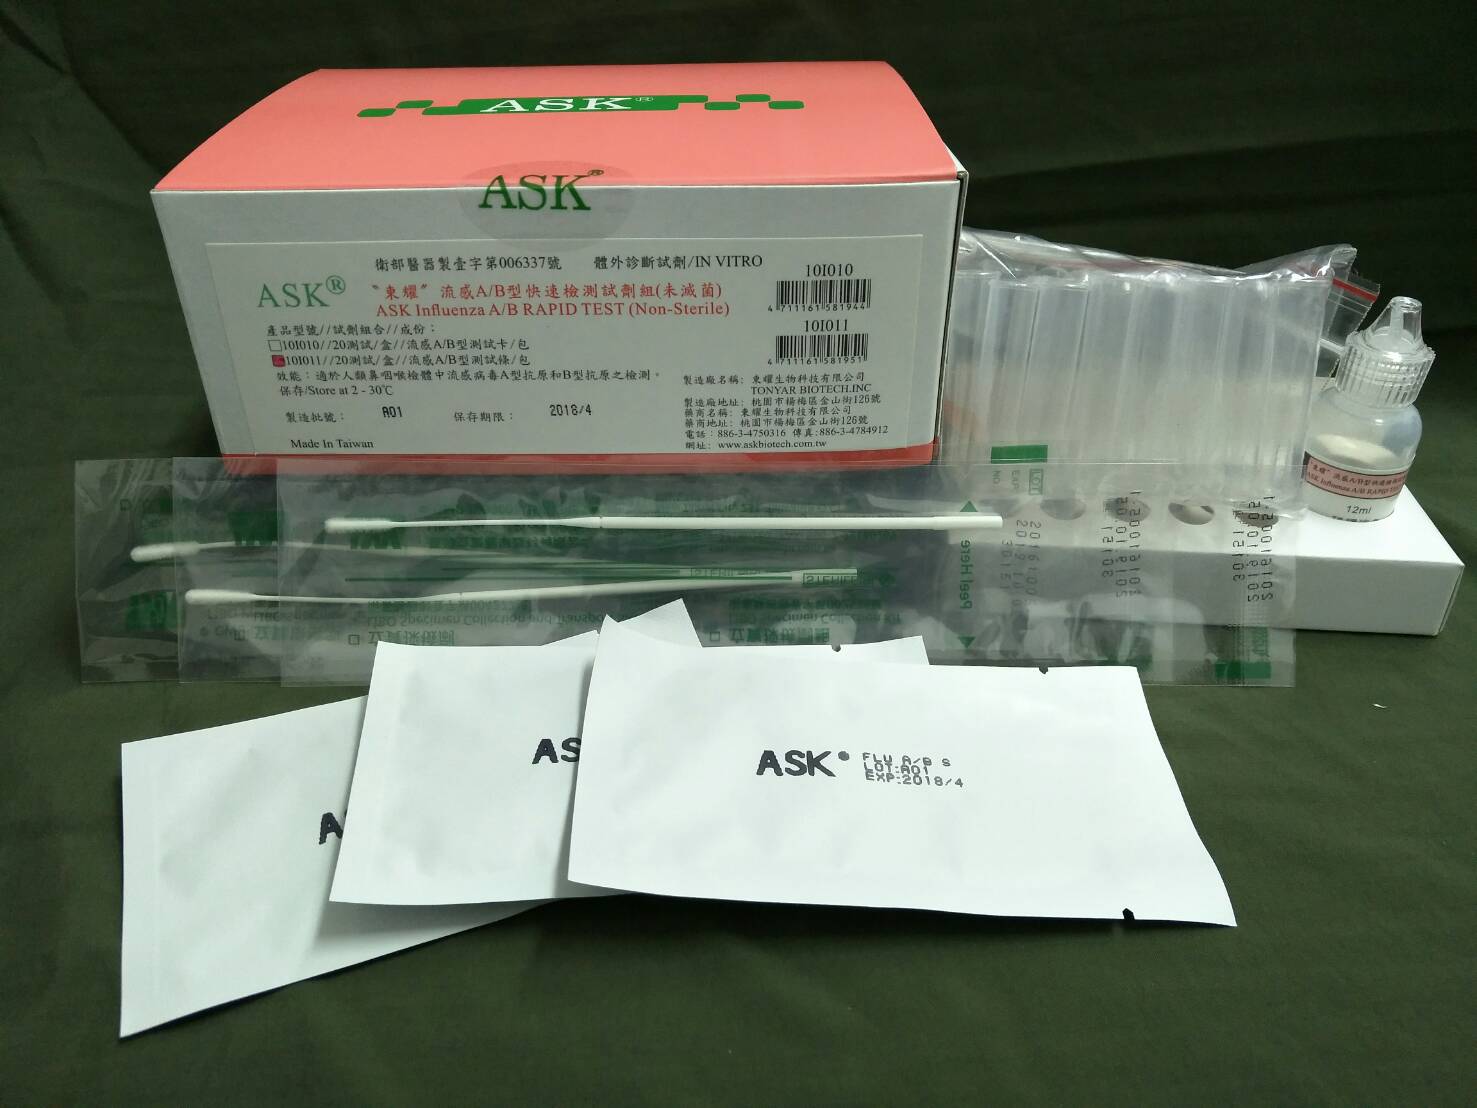 ASK Influenza A/B RAPID TEST (Non-Sterile)